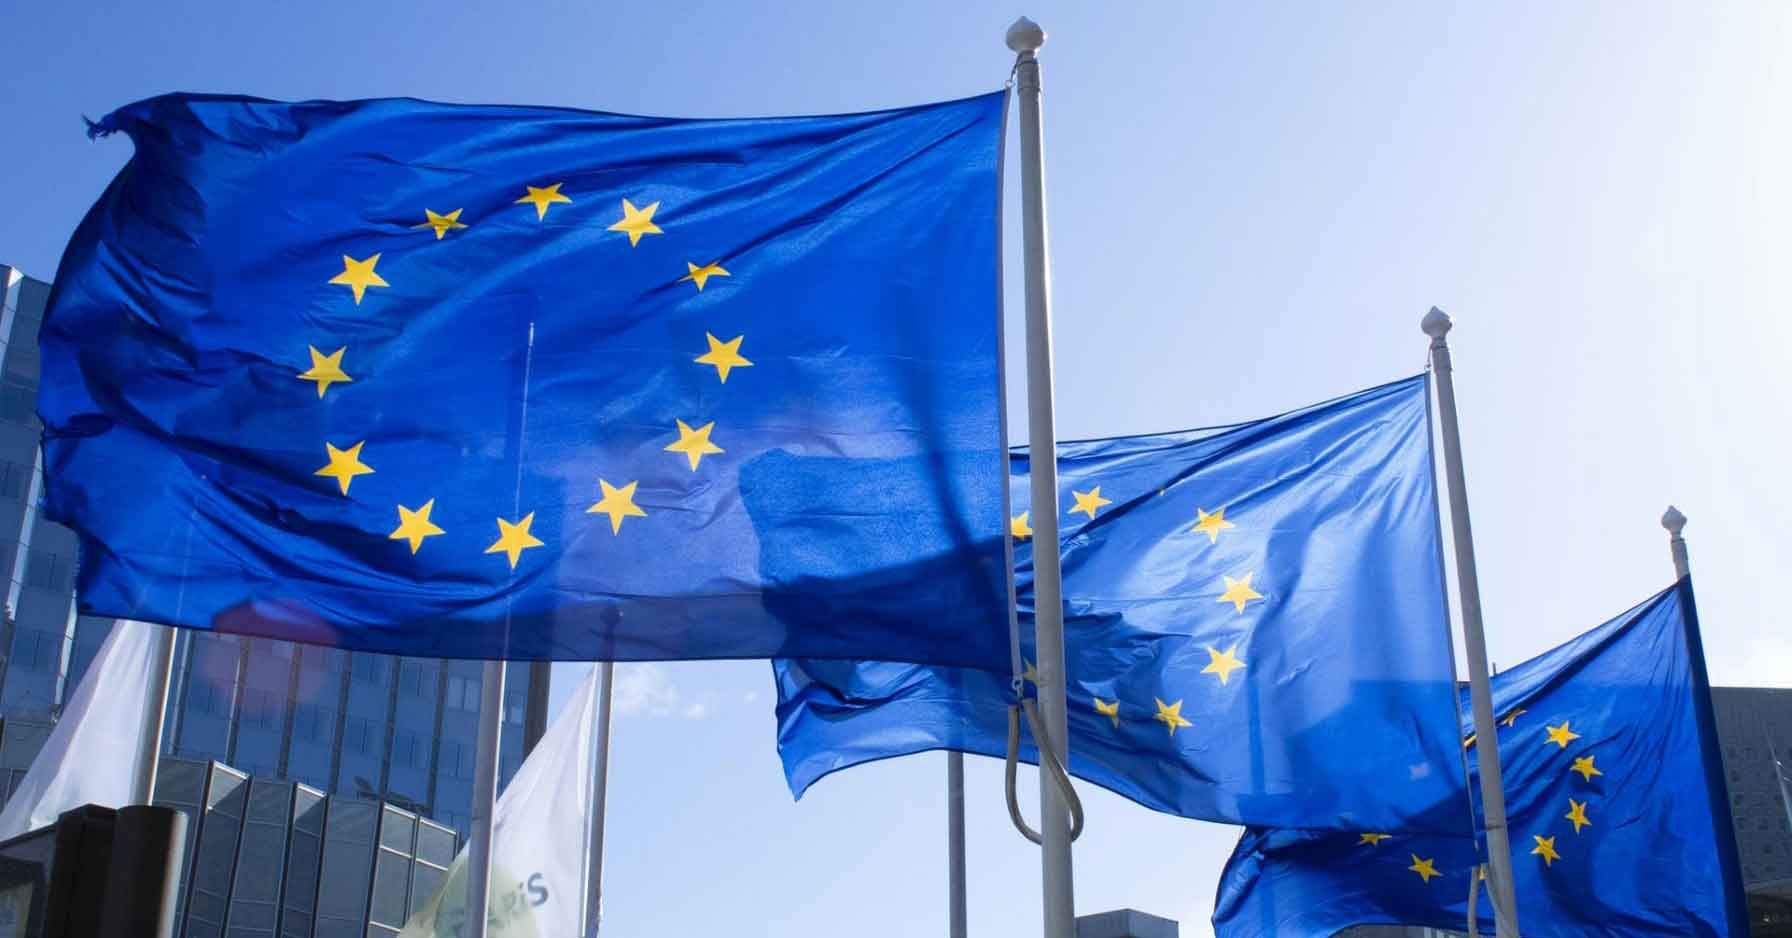 European-Union flags